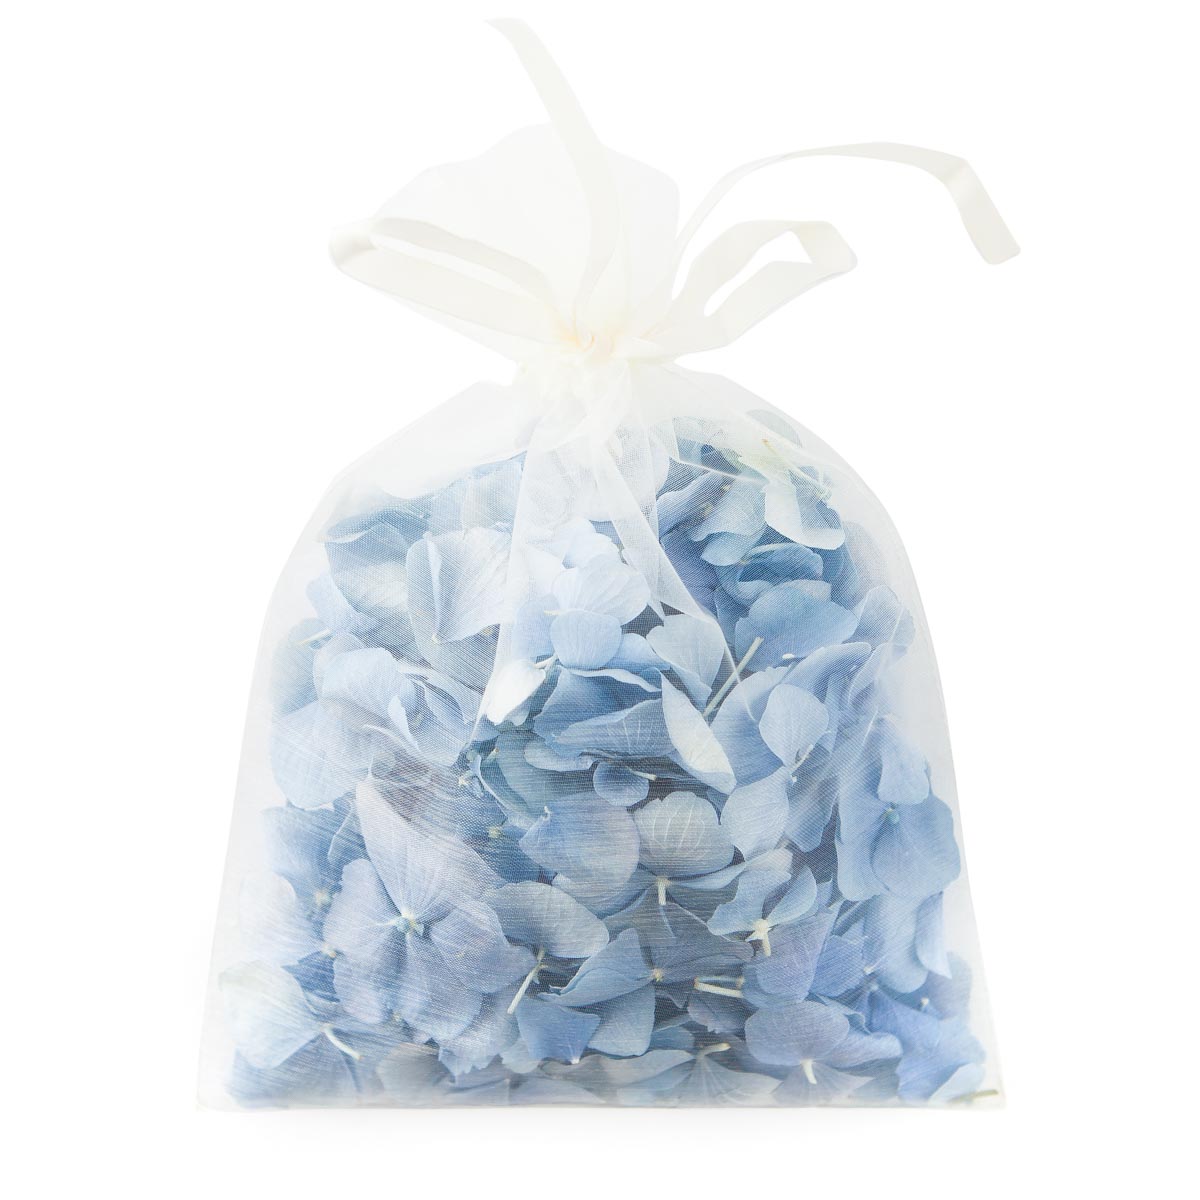 Dusky Blue Hydrangea Petals - 10 Handful Bag